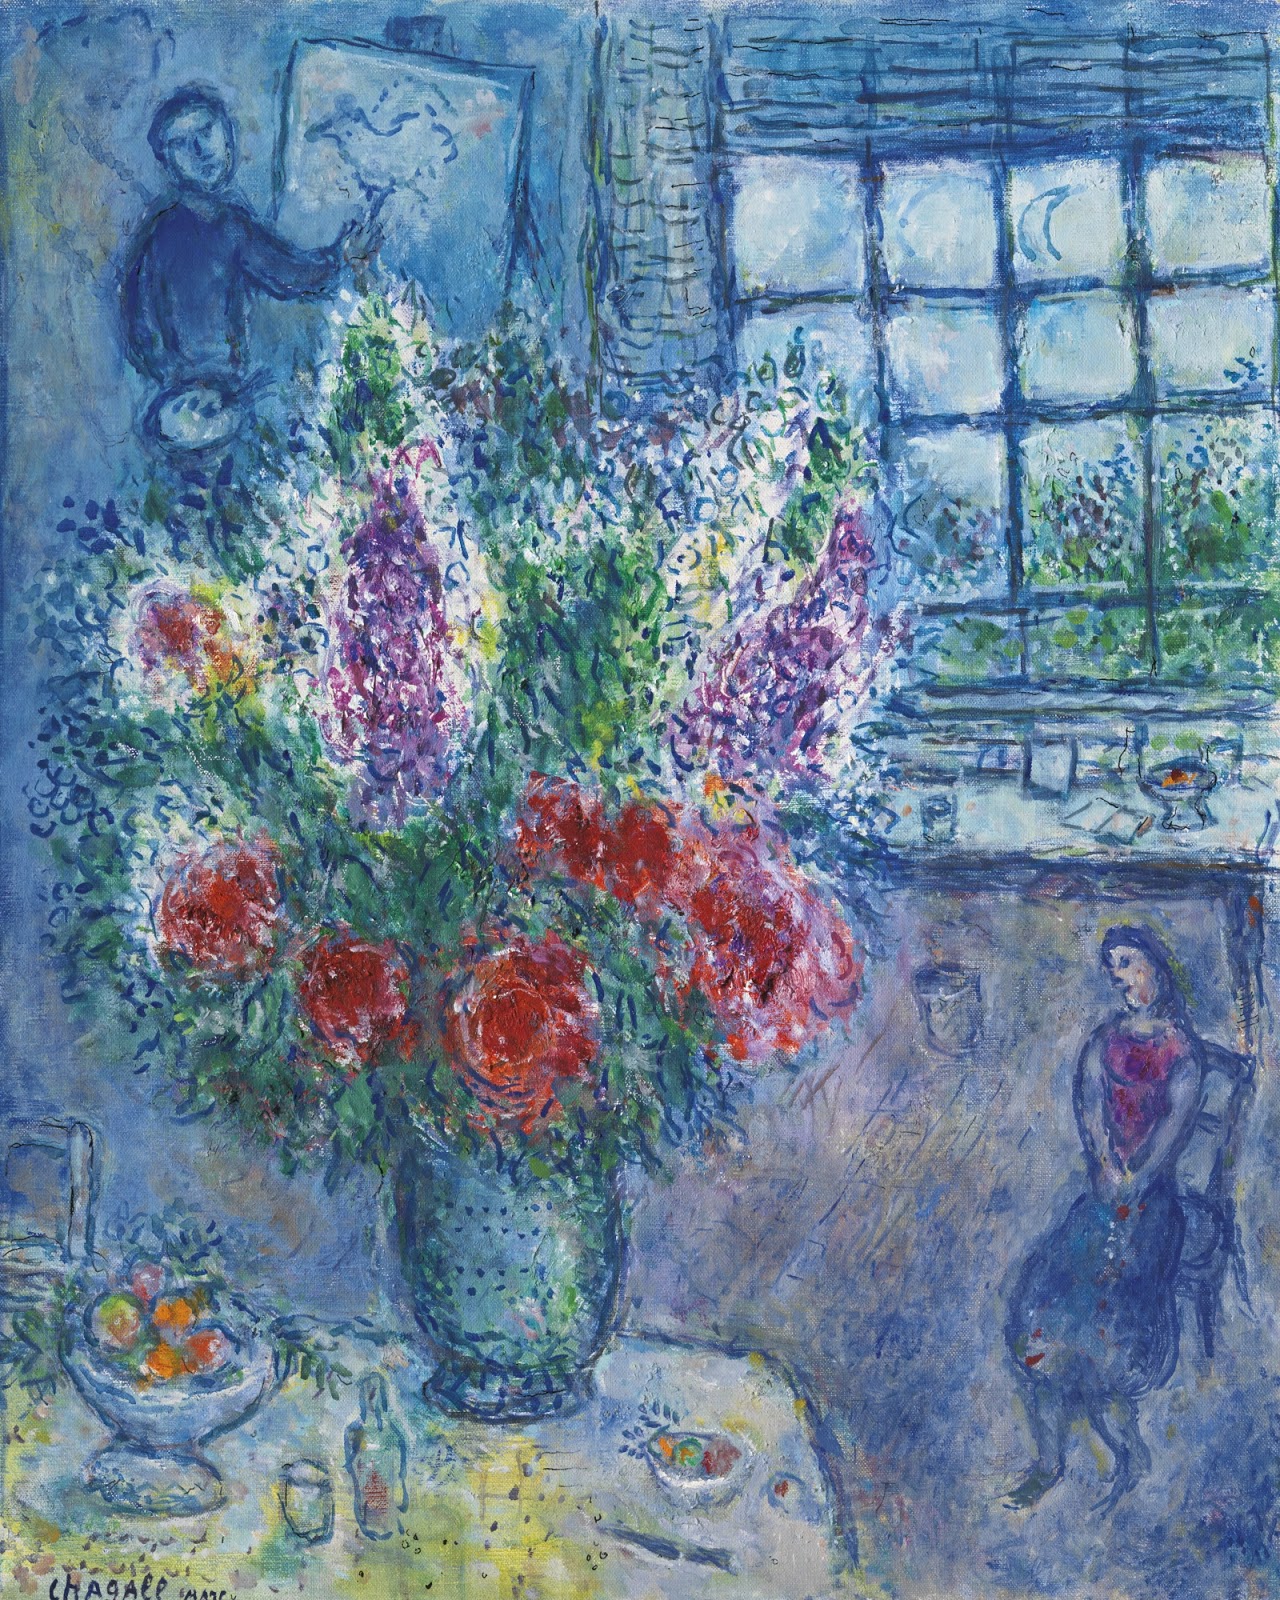 Marc+Chagall-1887-1985 (382).jpg